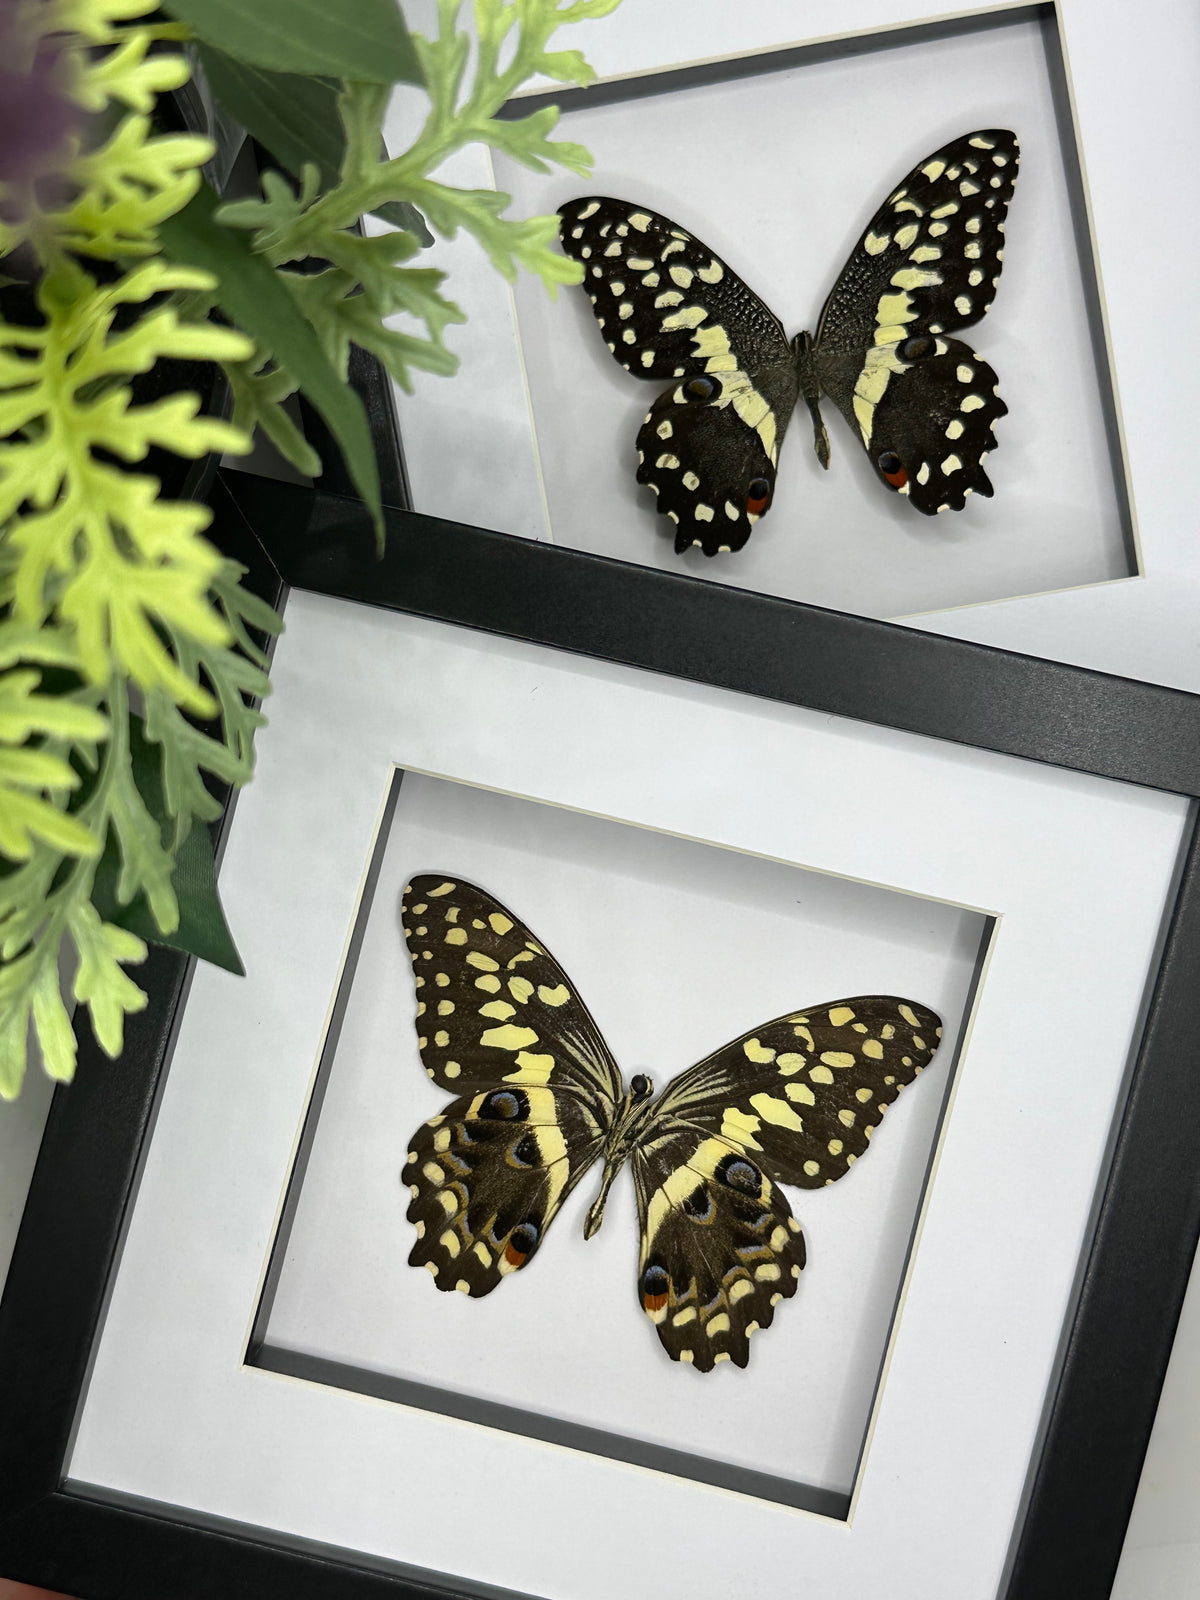 Citrus Swallowtail / Papilio Demodocus in a frame | Missing antenna